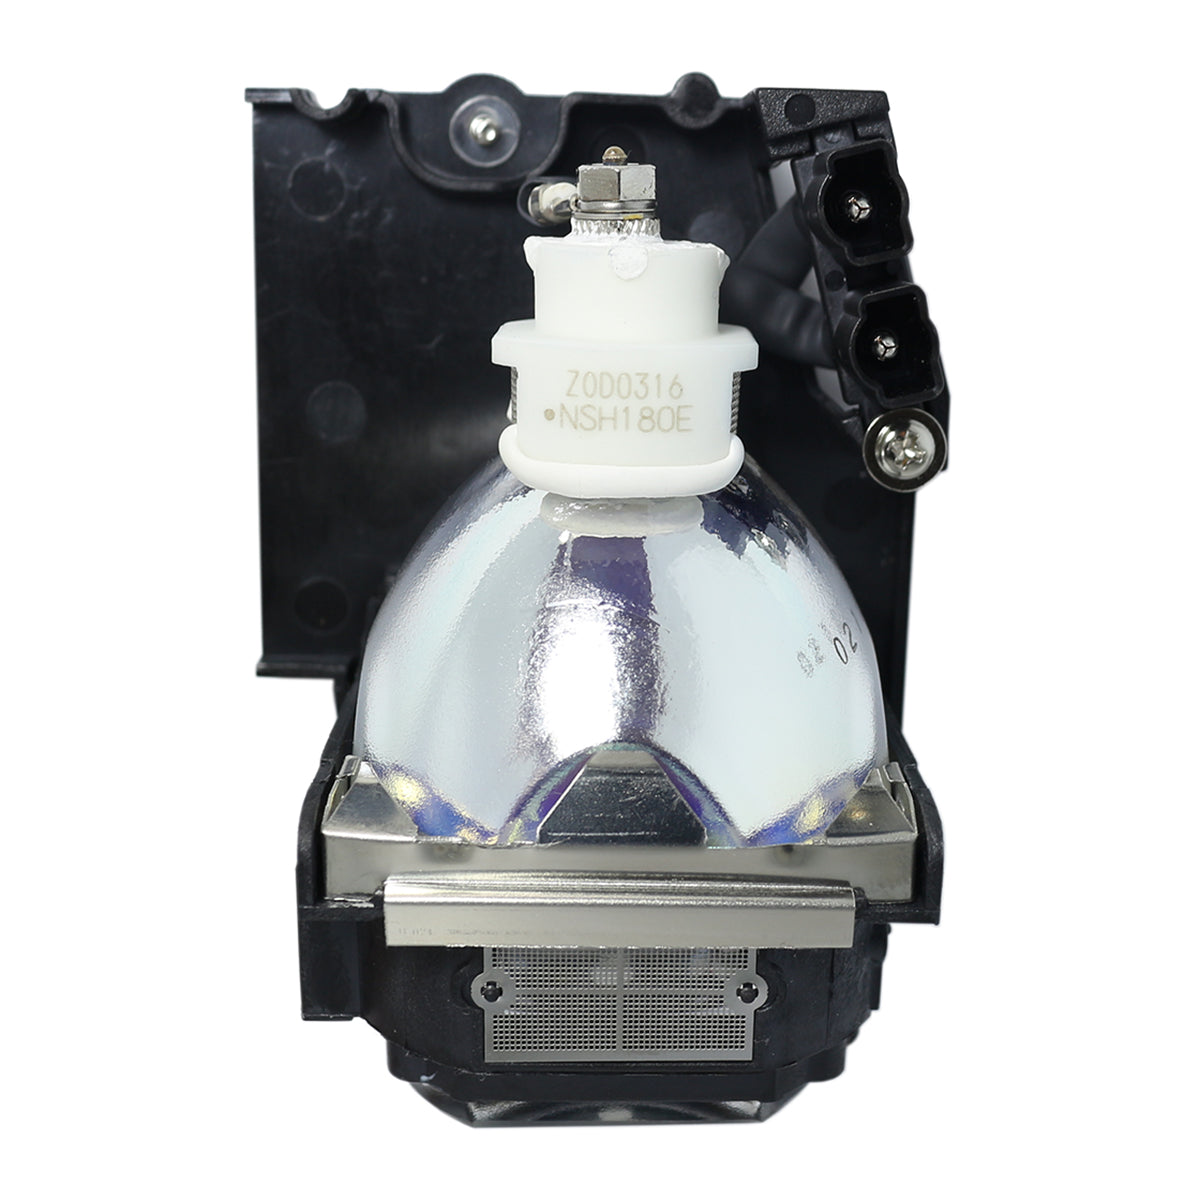 Geha 60-203257 Ushio Projector Lamp Module